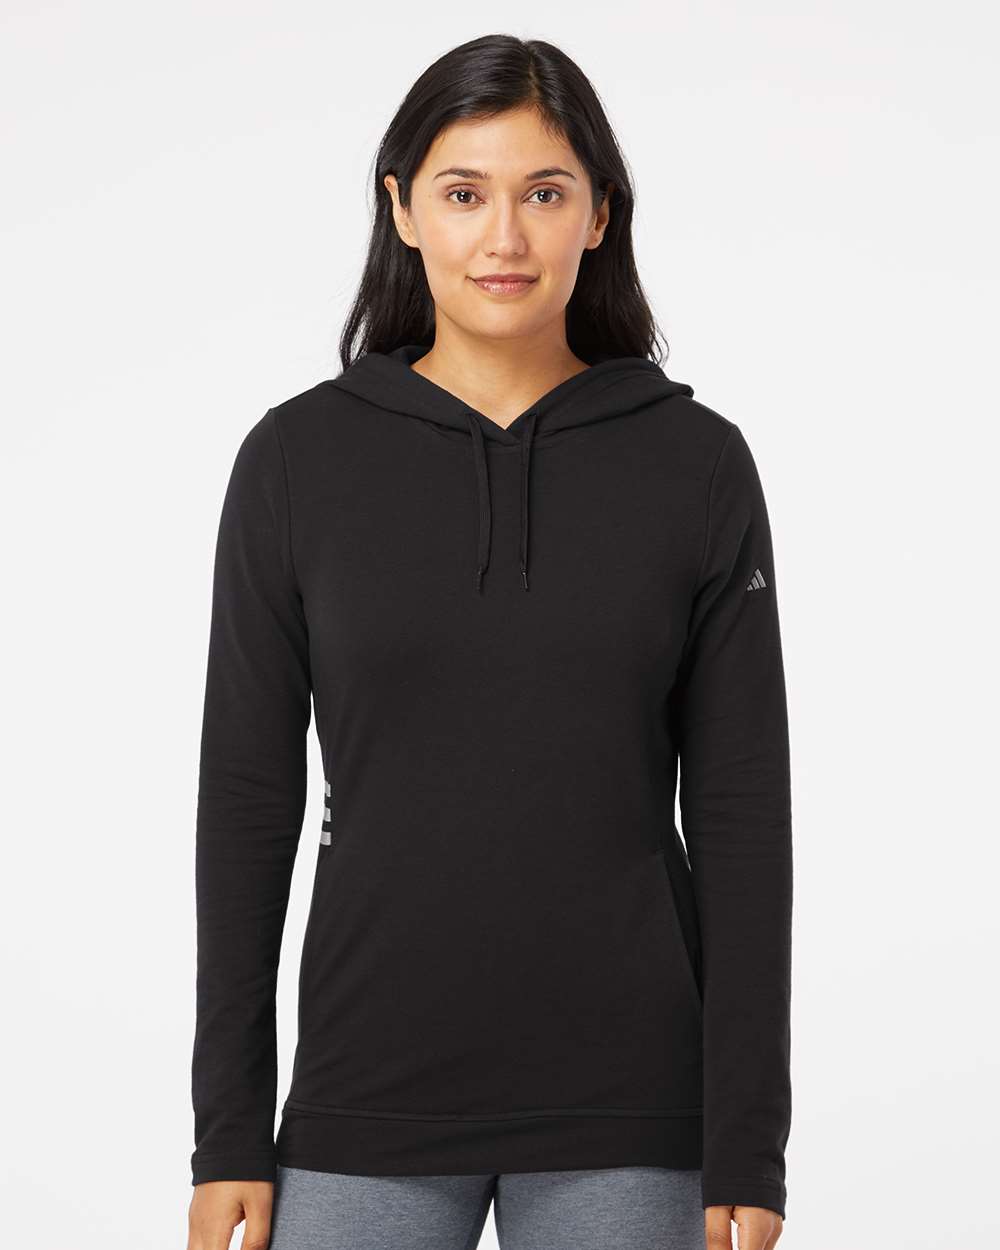 A451 - Women's Lightweight Hooded Sweatshirt